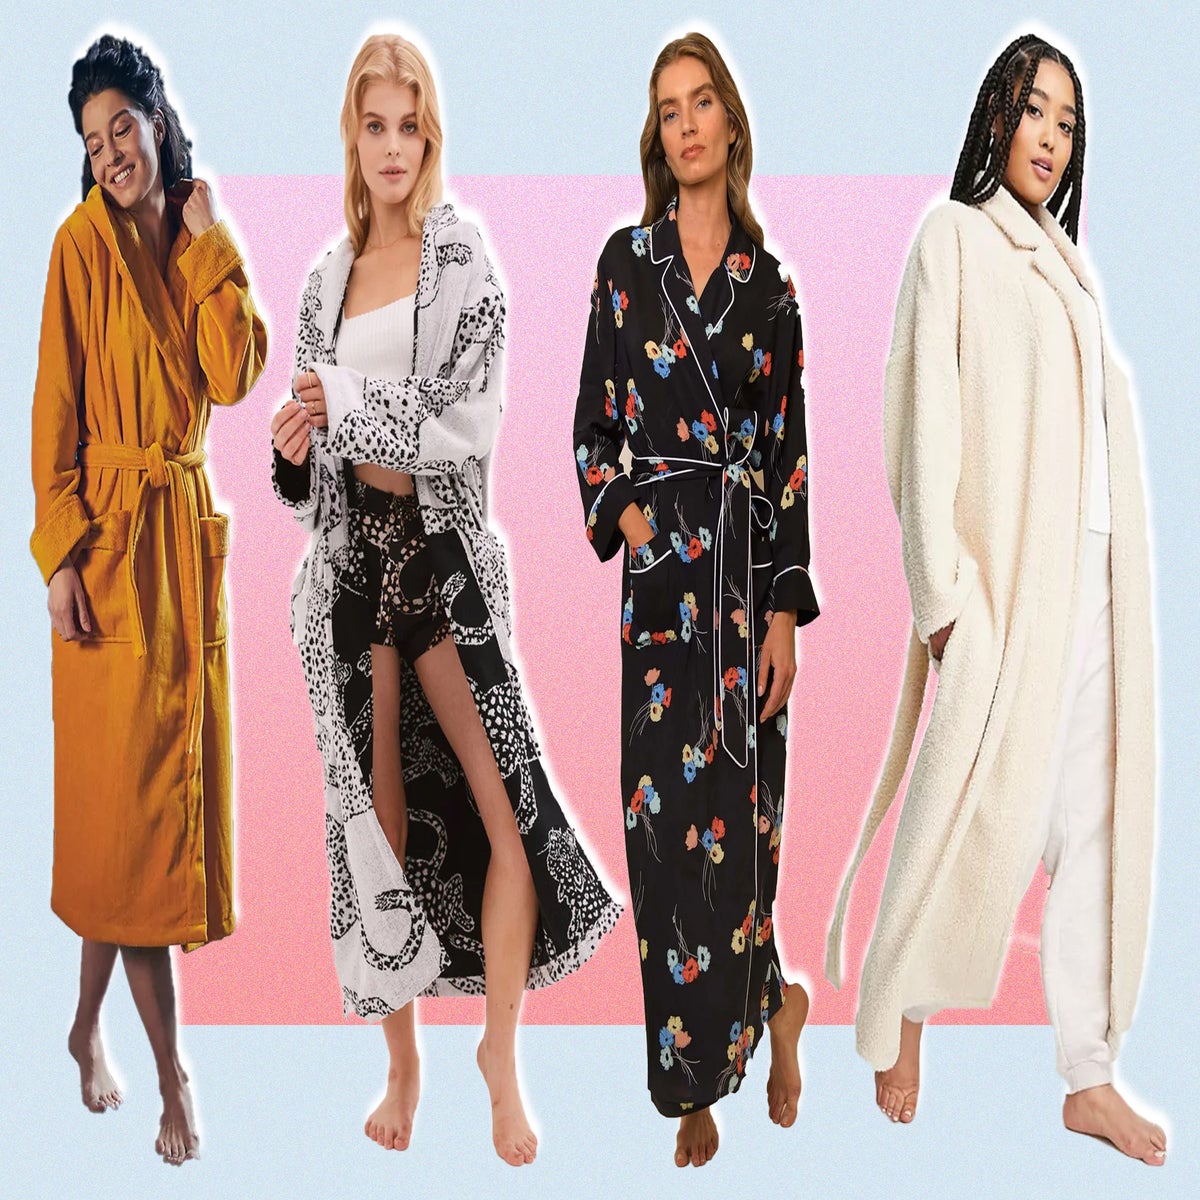 Luxury Designer Men's Silk Kimono Robe Novelty Long Sleeve Sleepwear  Bathrobe Oversized Satin Nightgown Summer Home Clothing